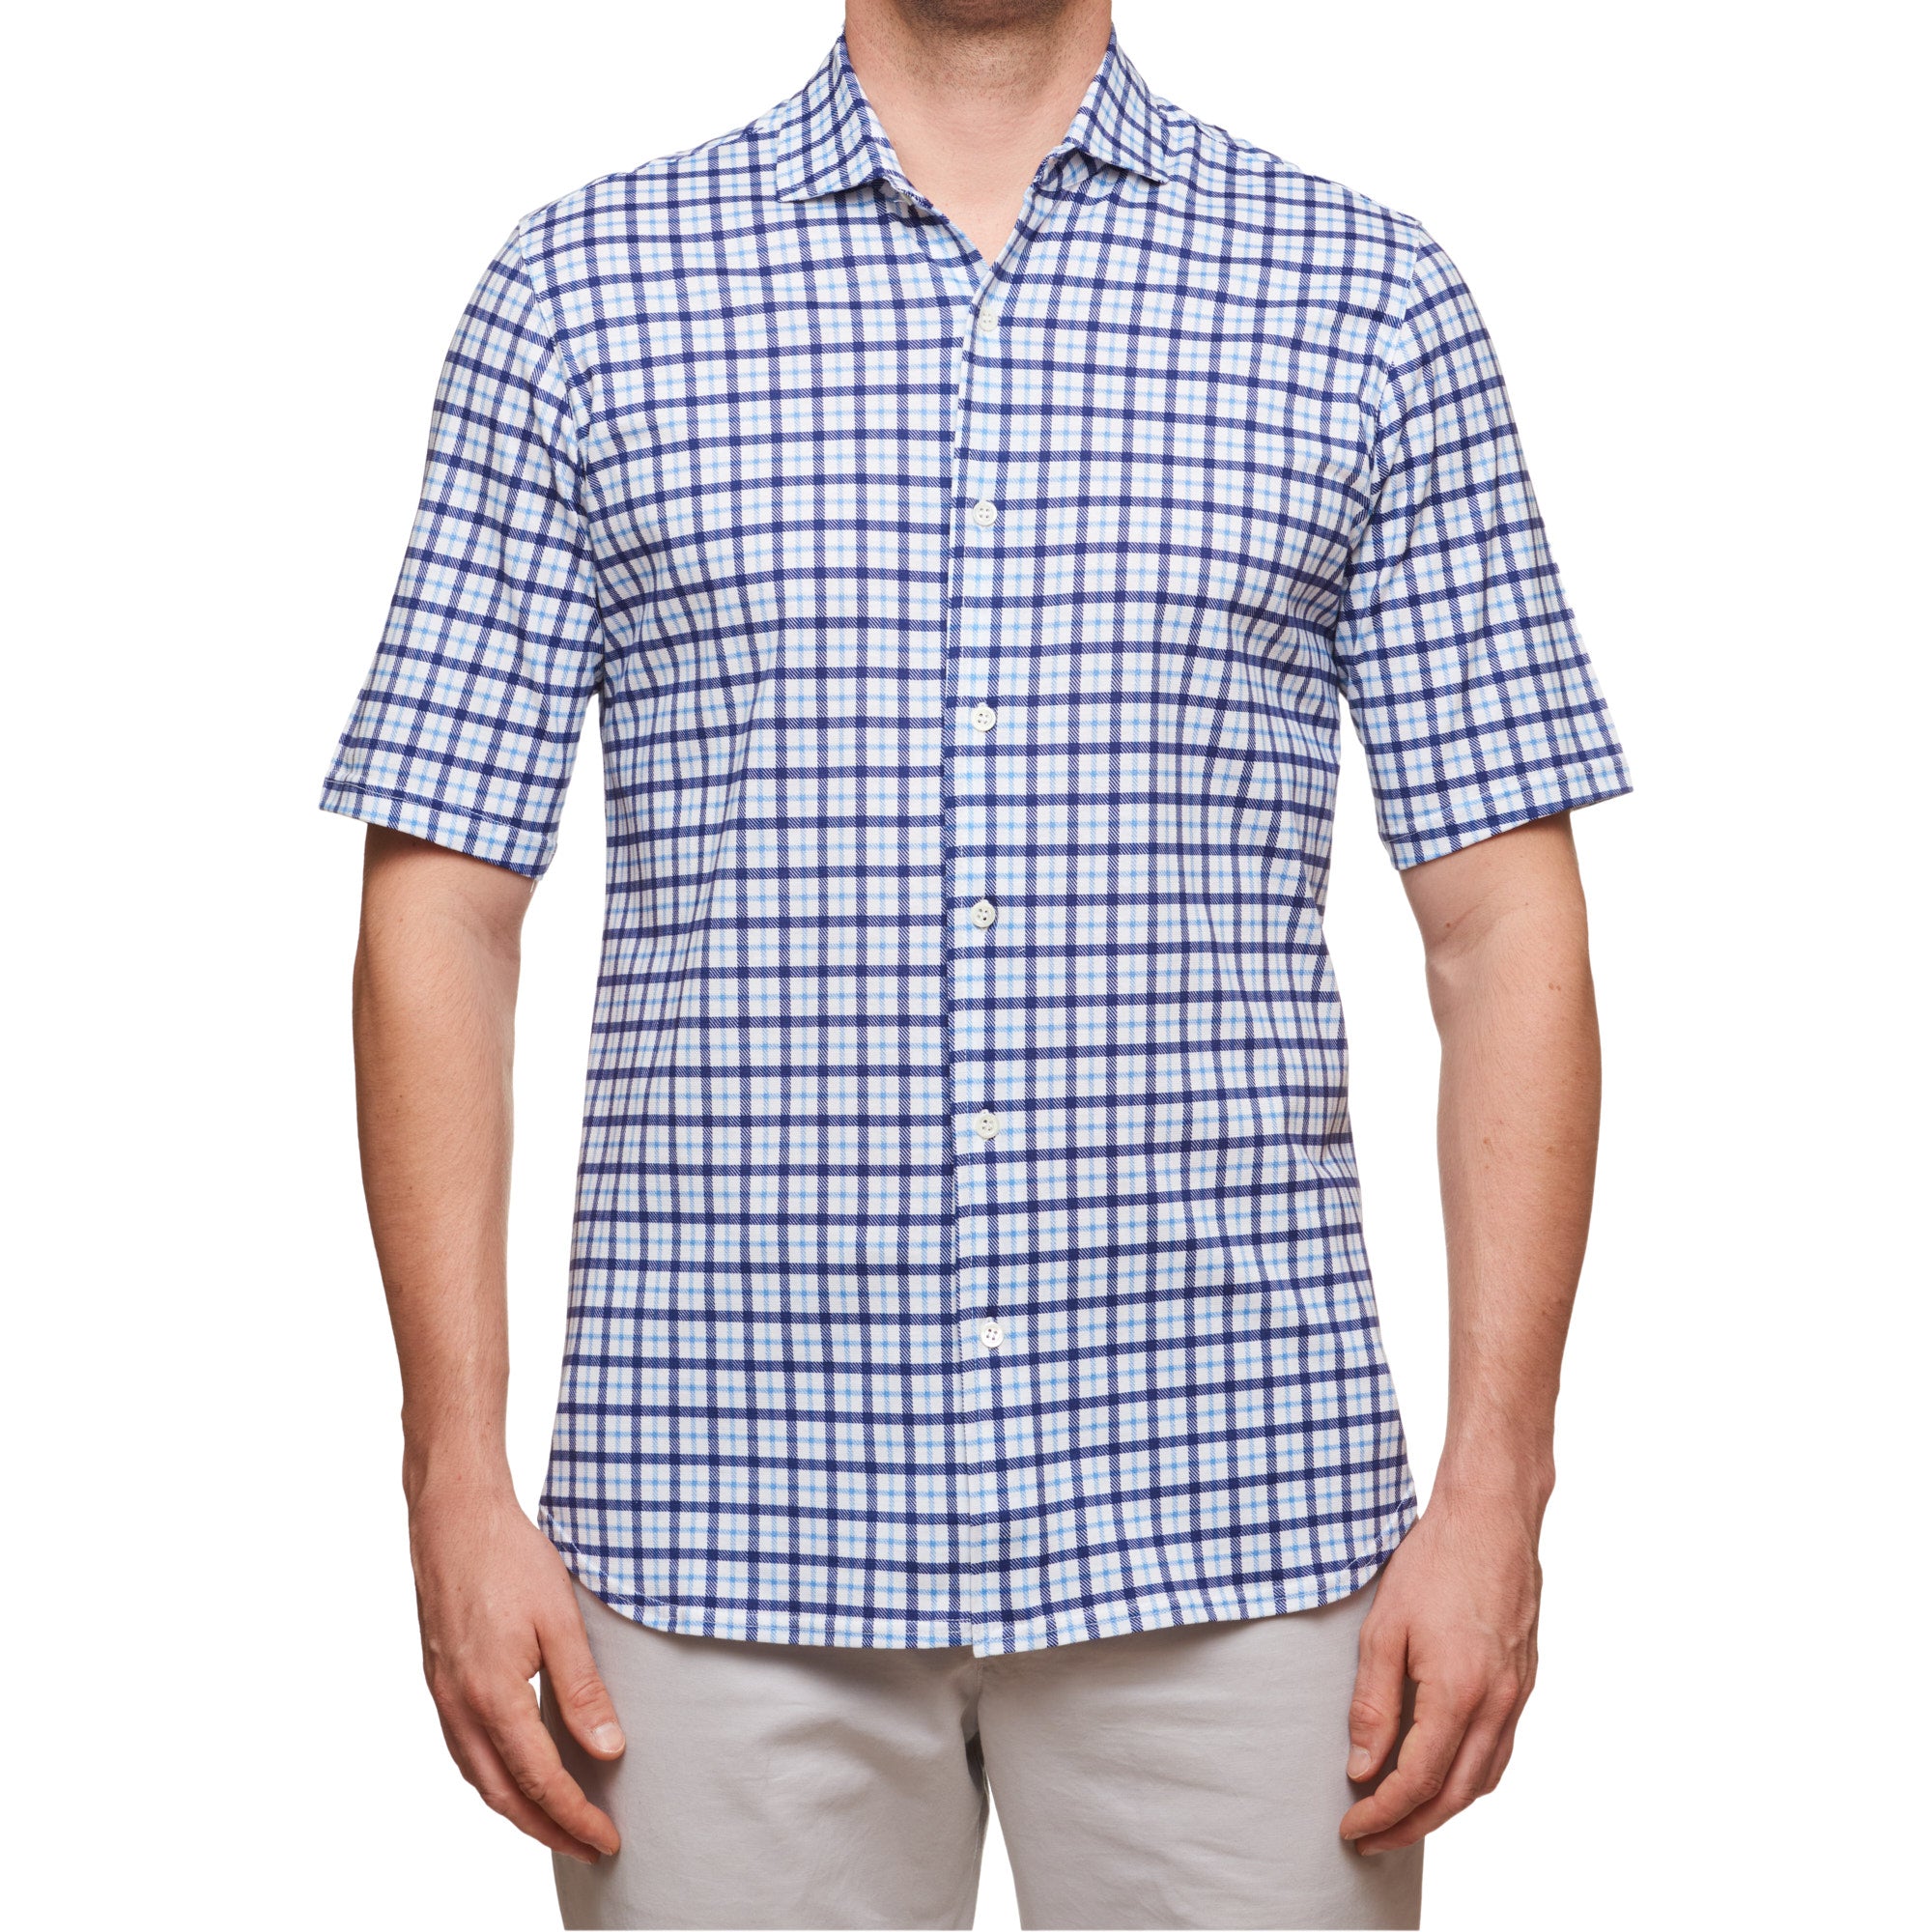 SARTORIO Napoli by KITON Blue-White Plaid Cotton Short Sleeve Casual Shirt NEW SARTORIO